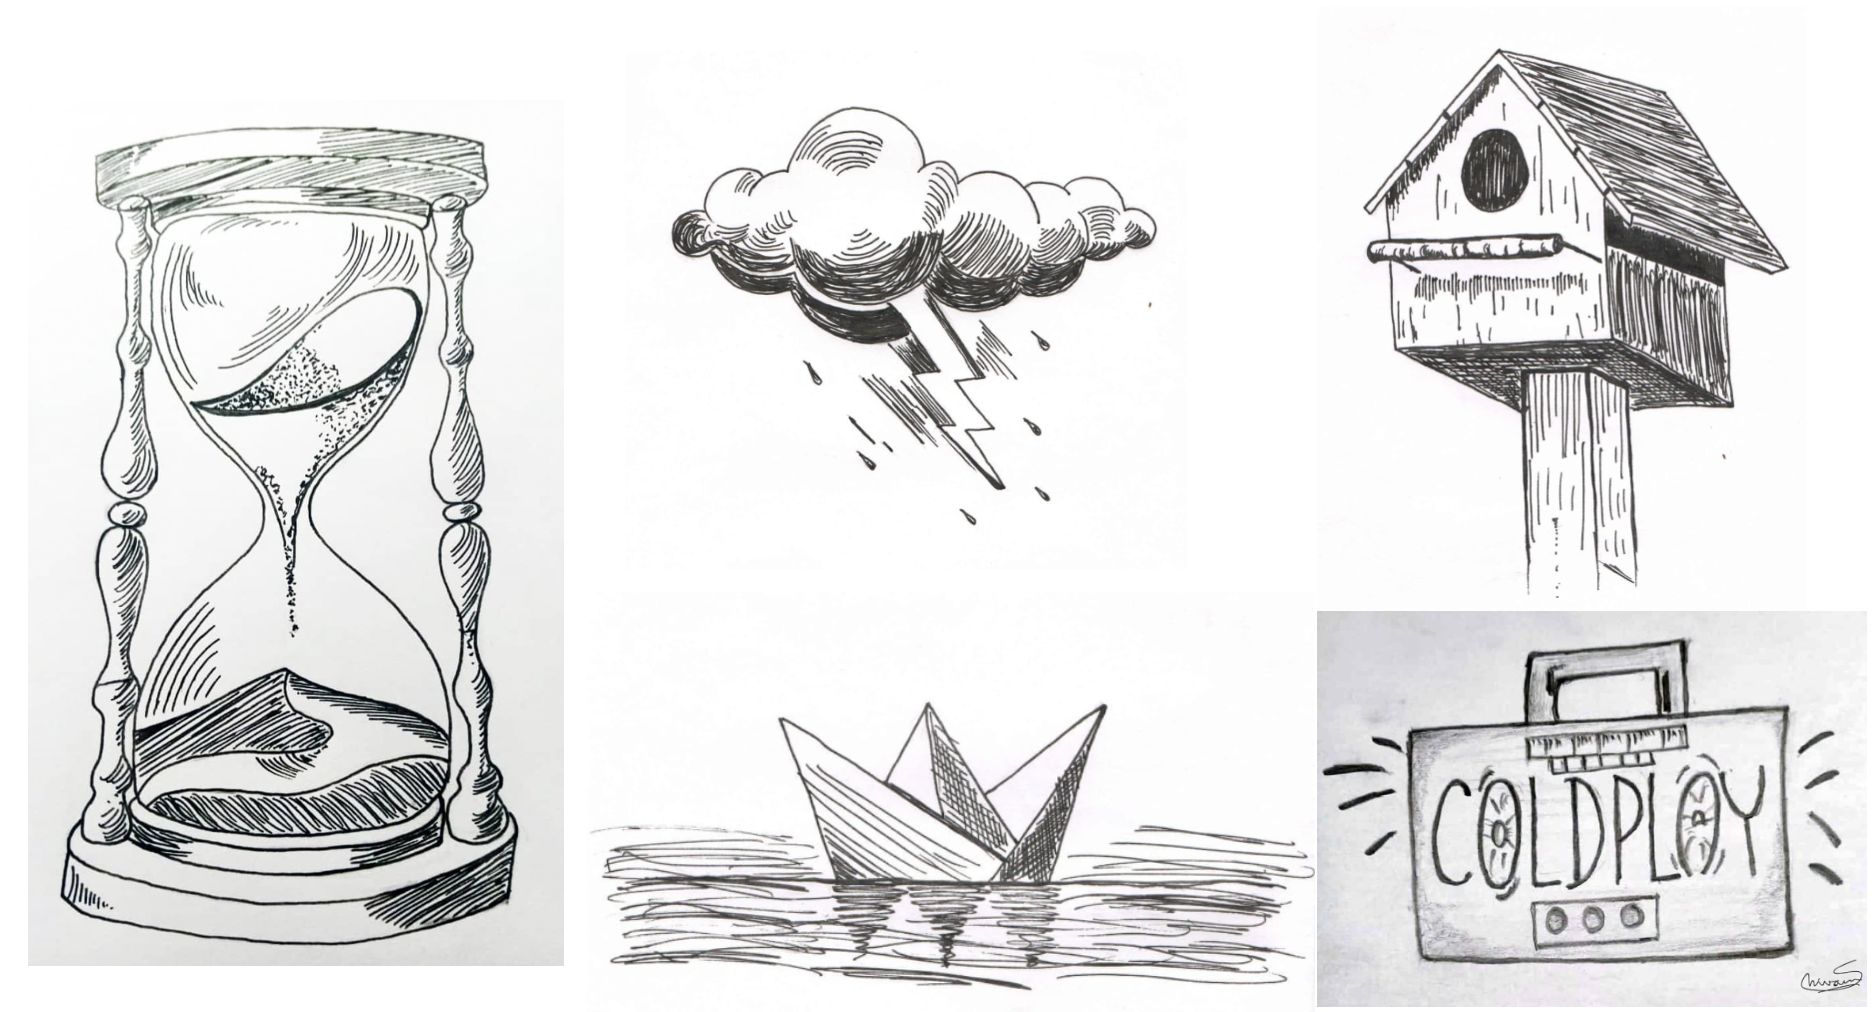 Some of Sharma’s Inktober illustrations